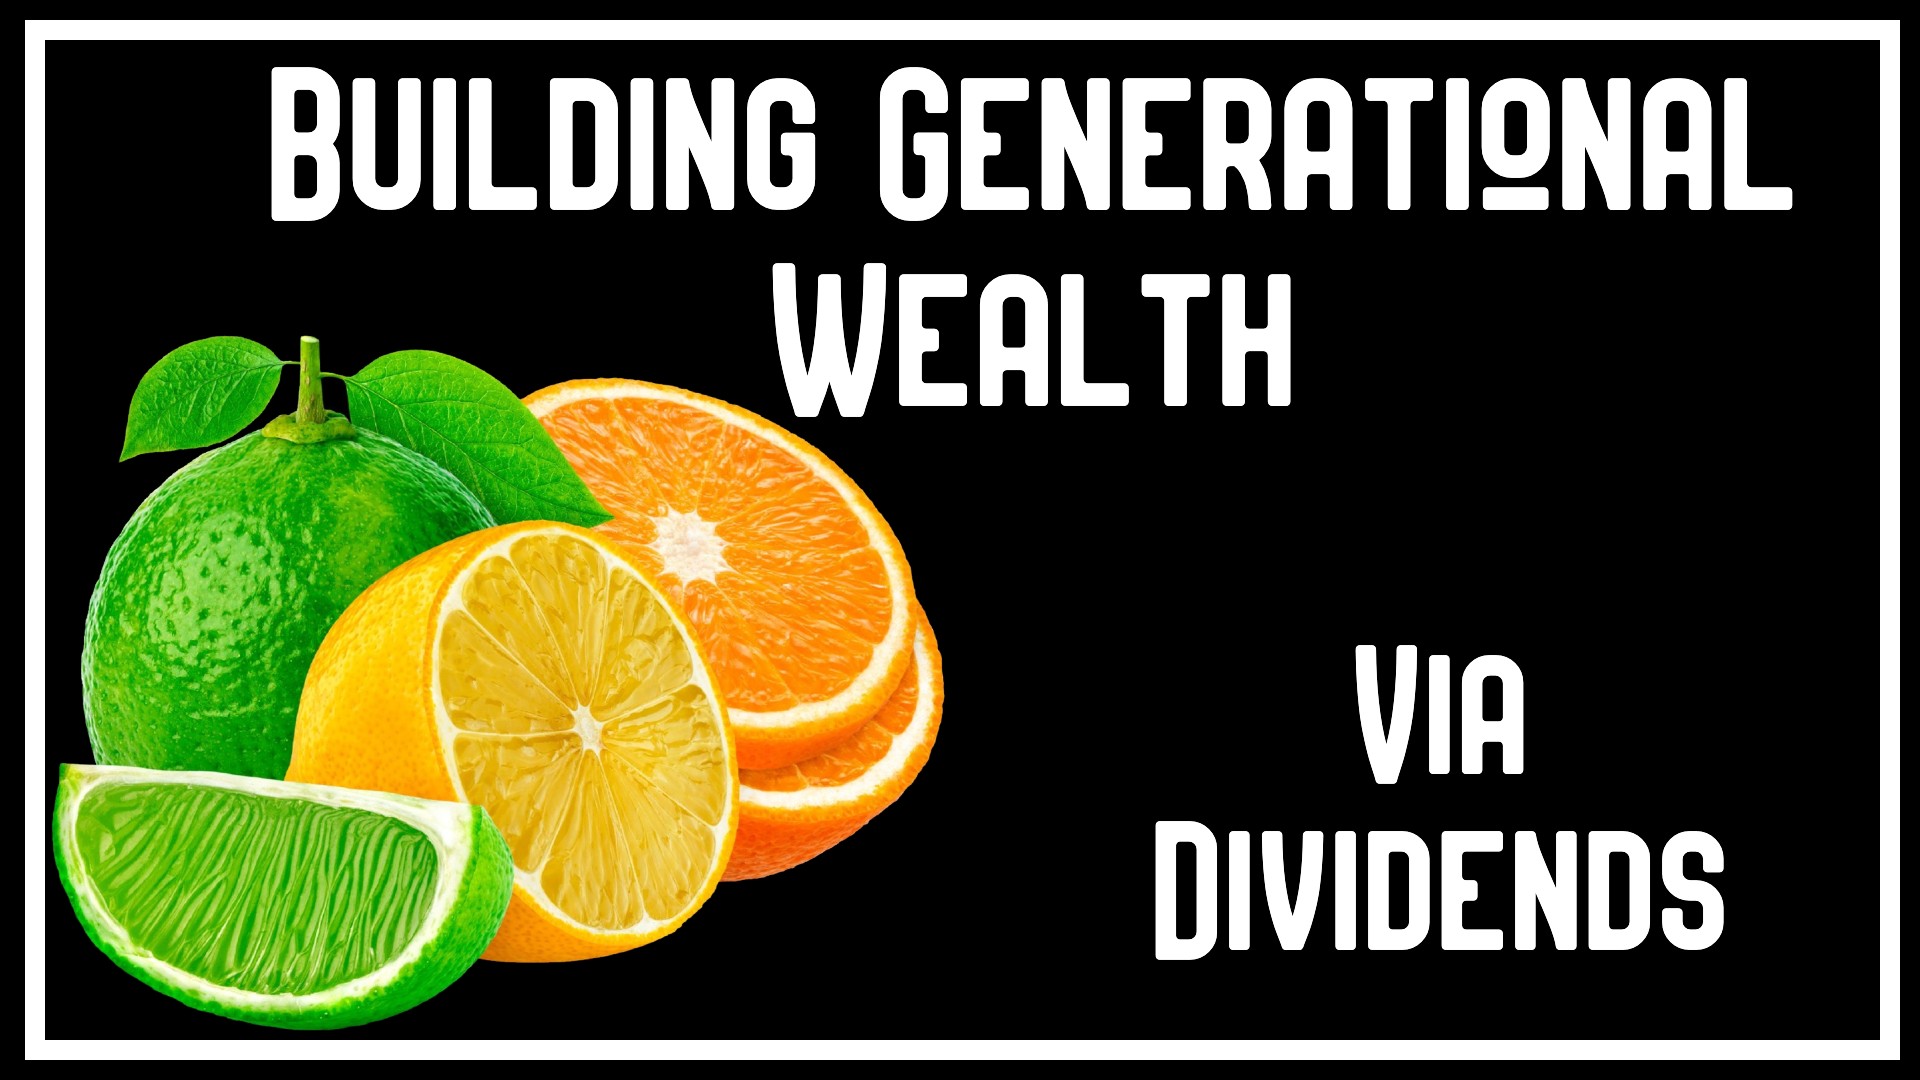 Building Generational Wealth: Via Dividends